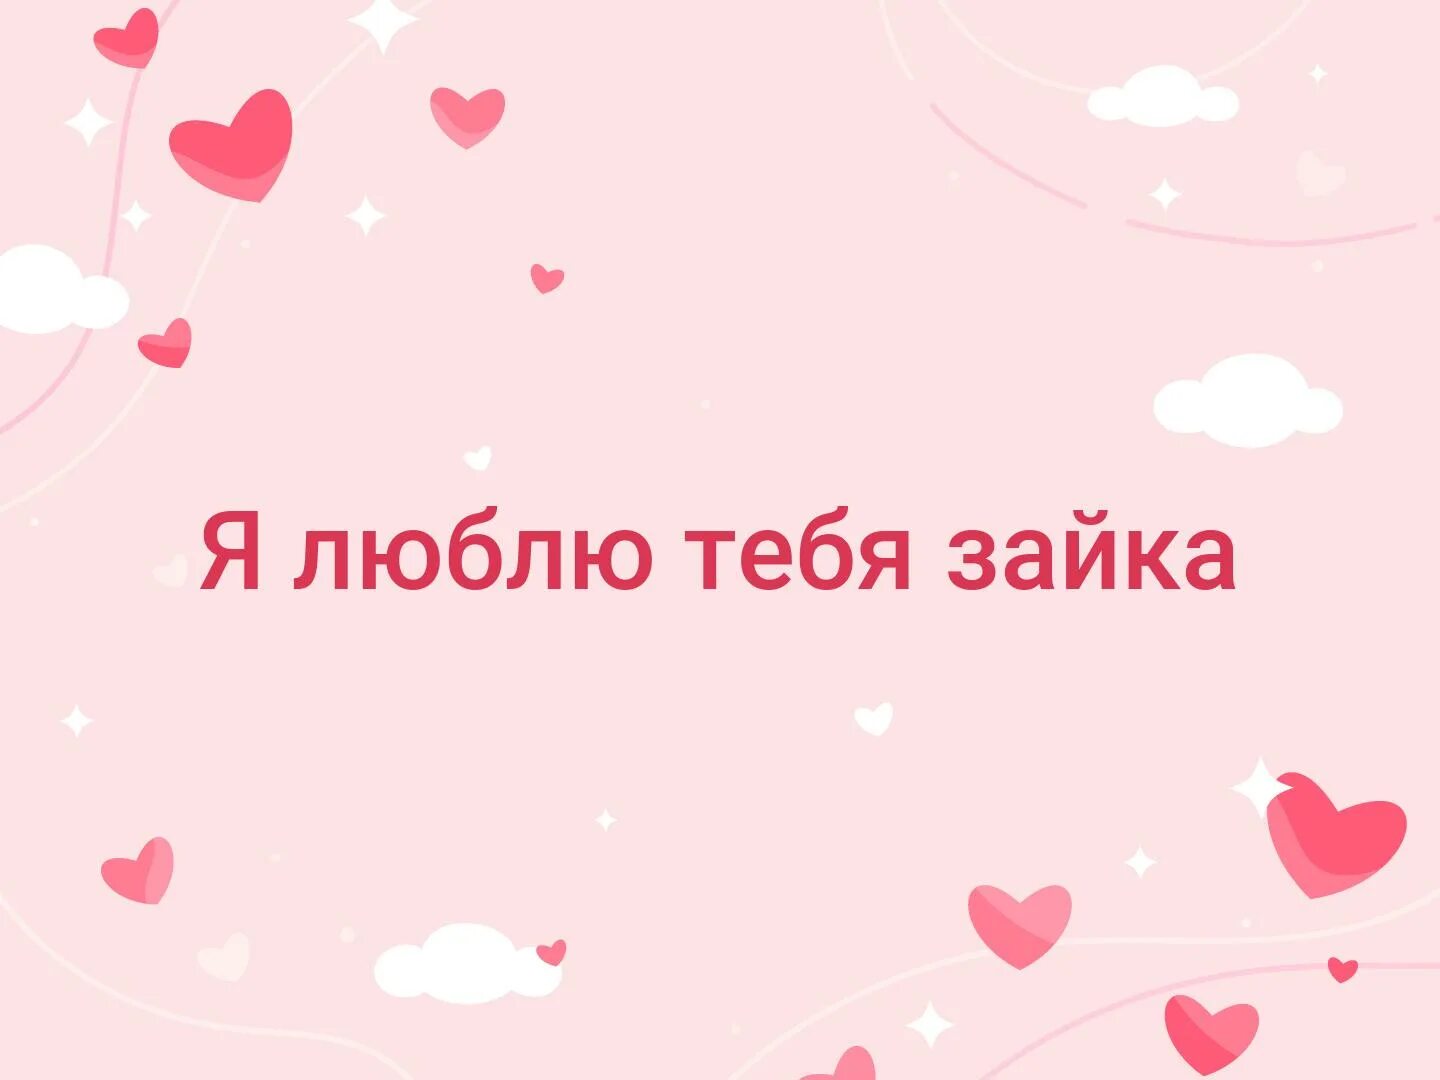 Как будет на русском я тебя люблю. Люблю тебя Зайка. Я тебя люблю. Надпись я тебя люблю. Люблю тебя Зайчонок.